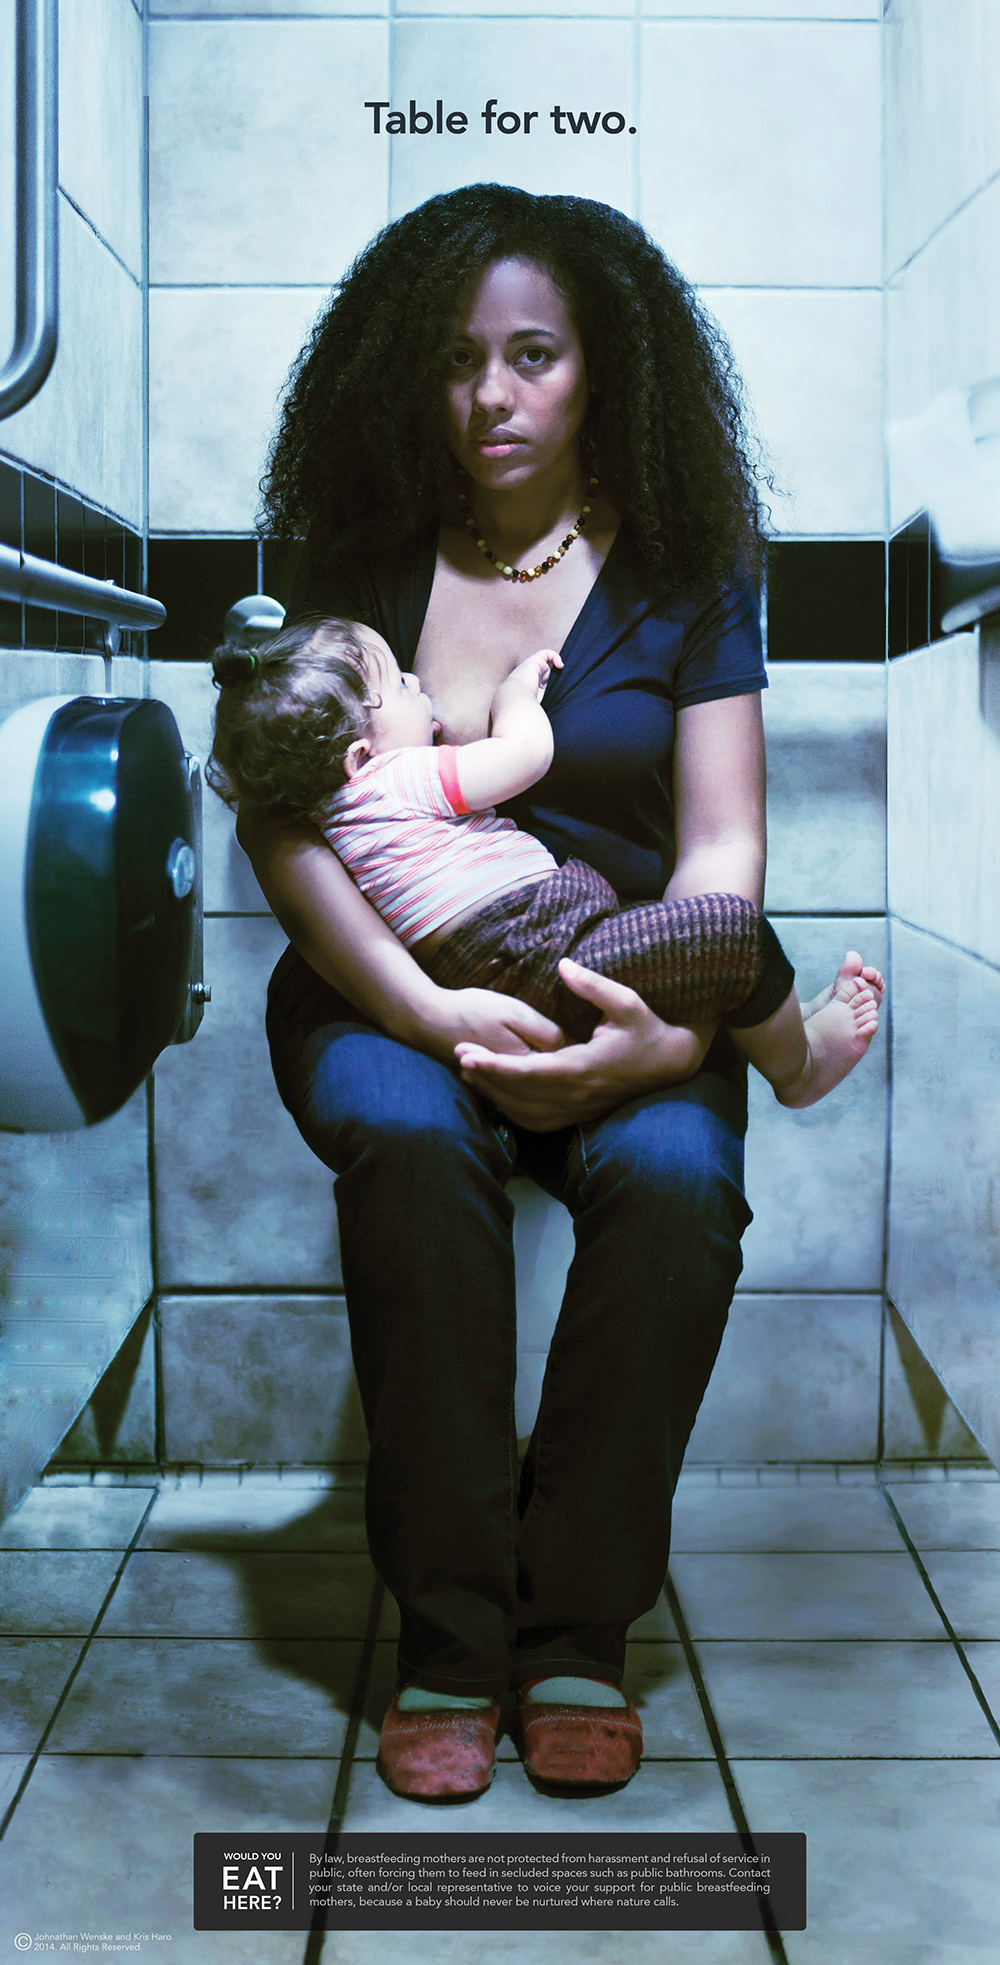 breastfeeding mom mothers baby babies nurture caring compassion public service Public Service Ad psa